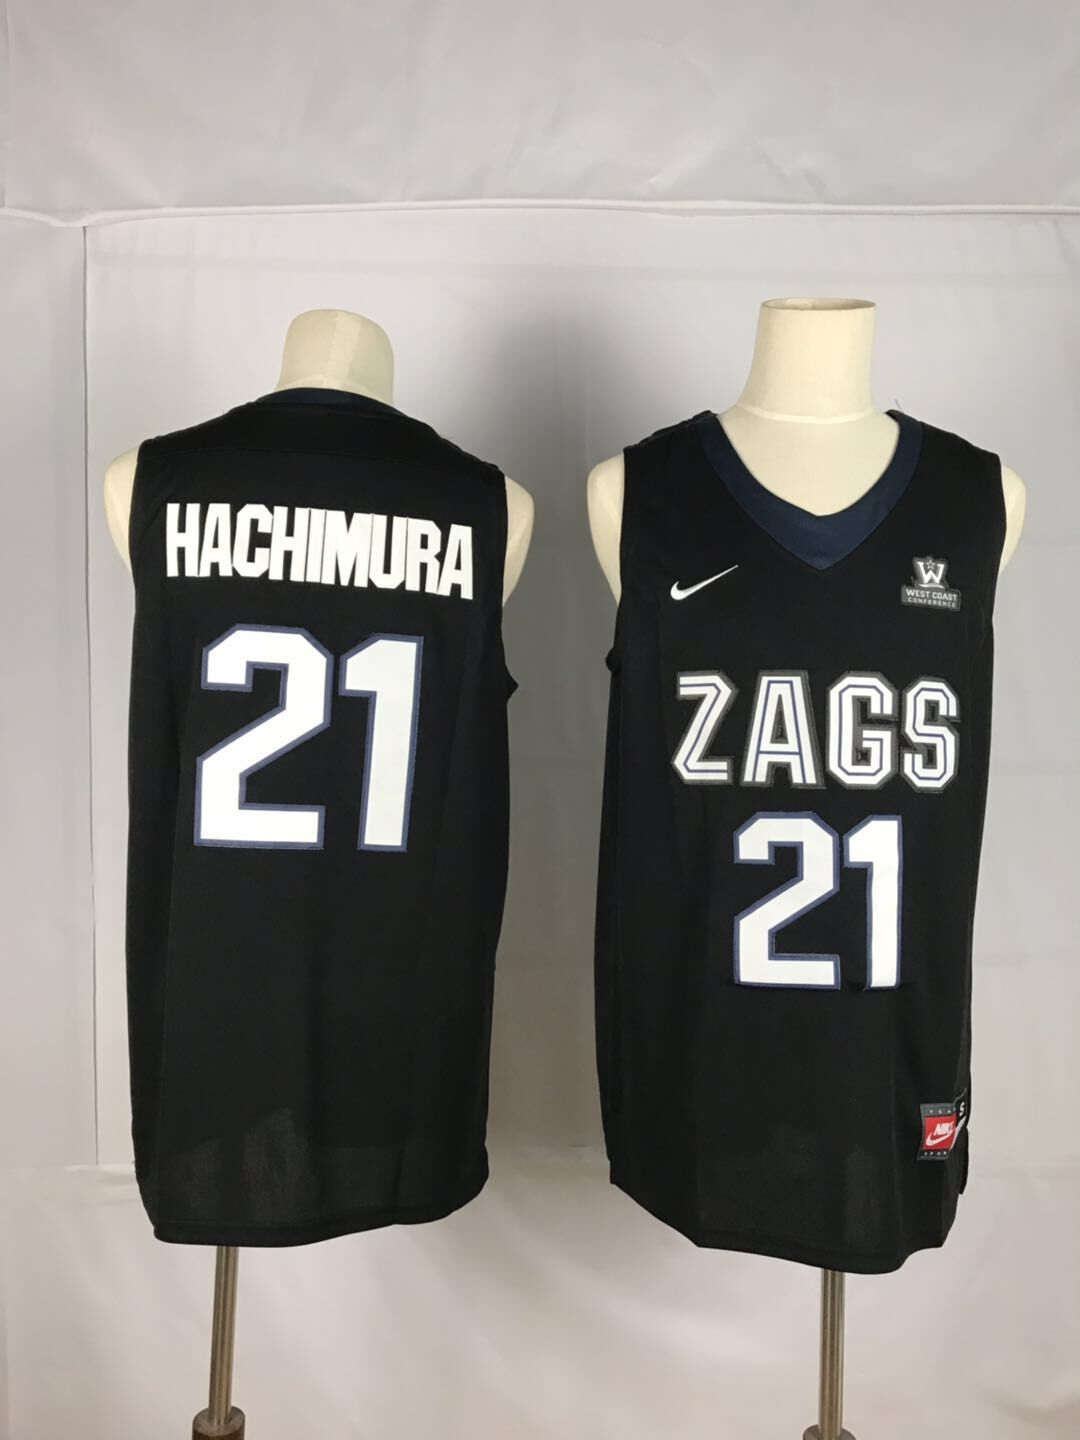 gonzaga basketball jerseys for sale